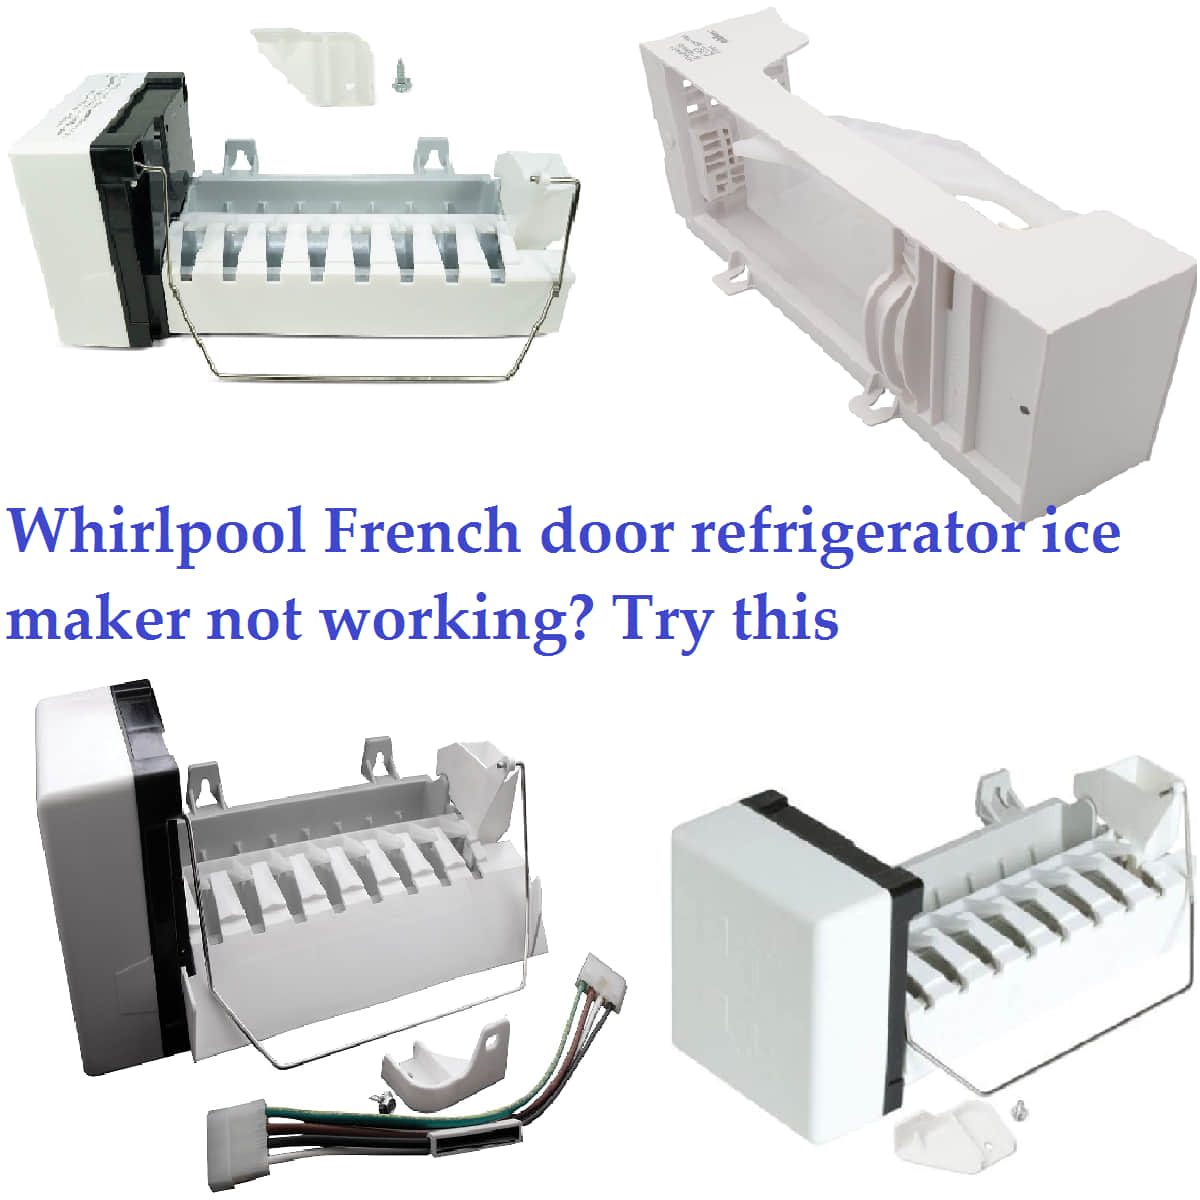 Whirlpool French door refrigerator ice maker not working